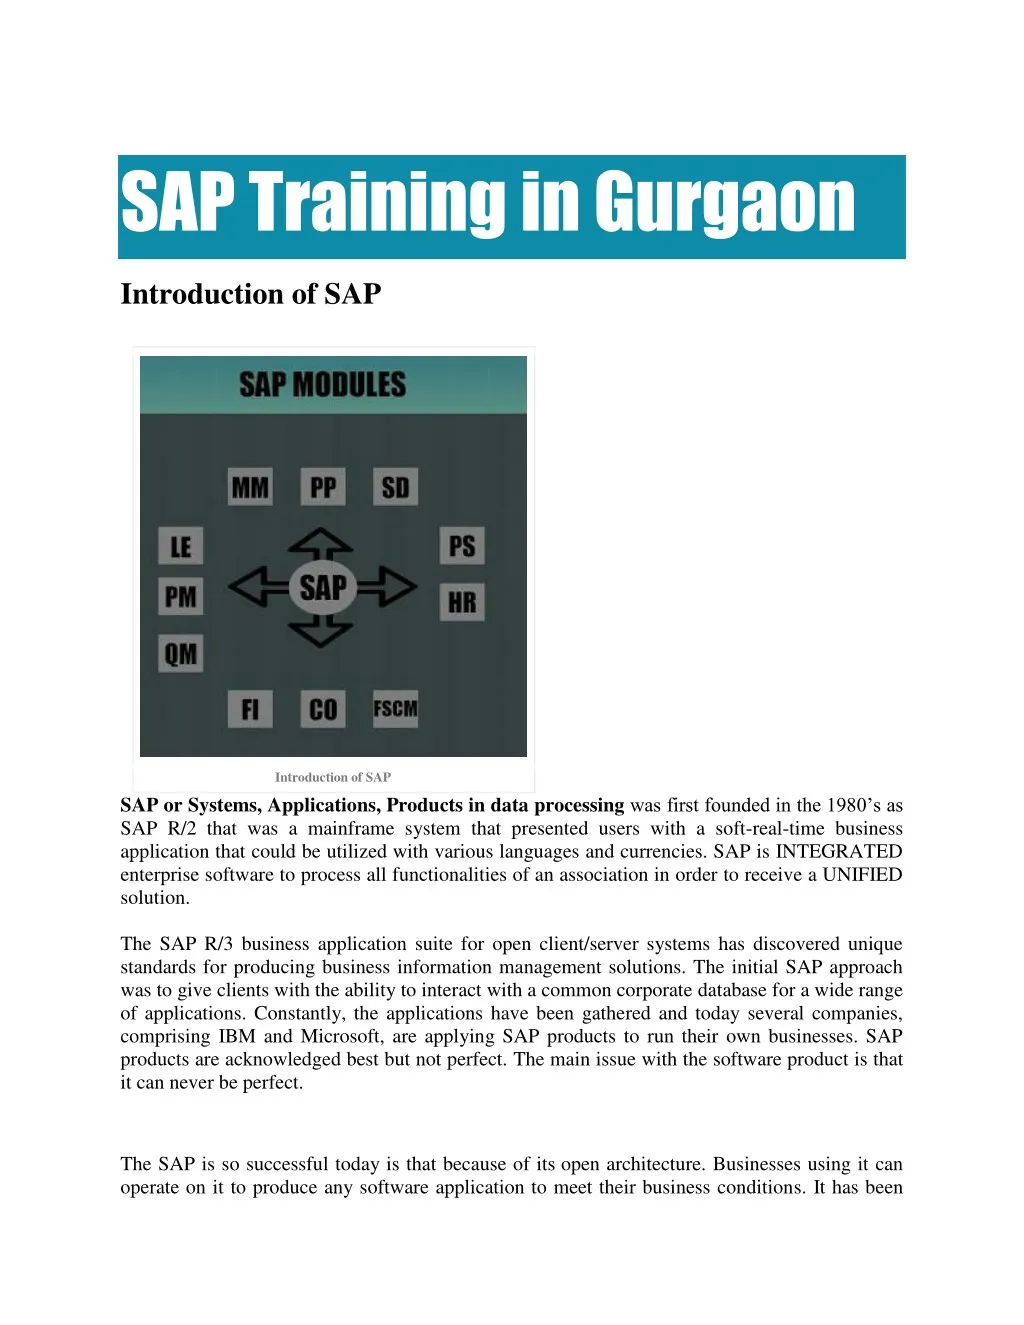 sap training in gurgaon